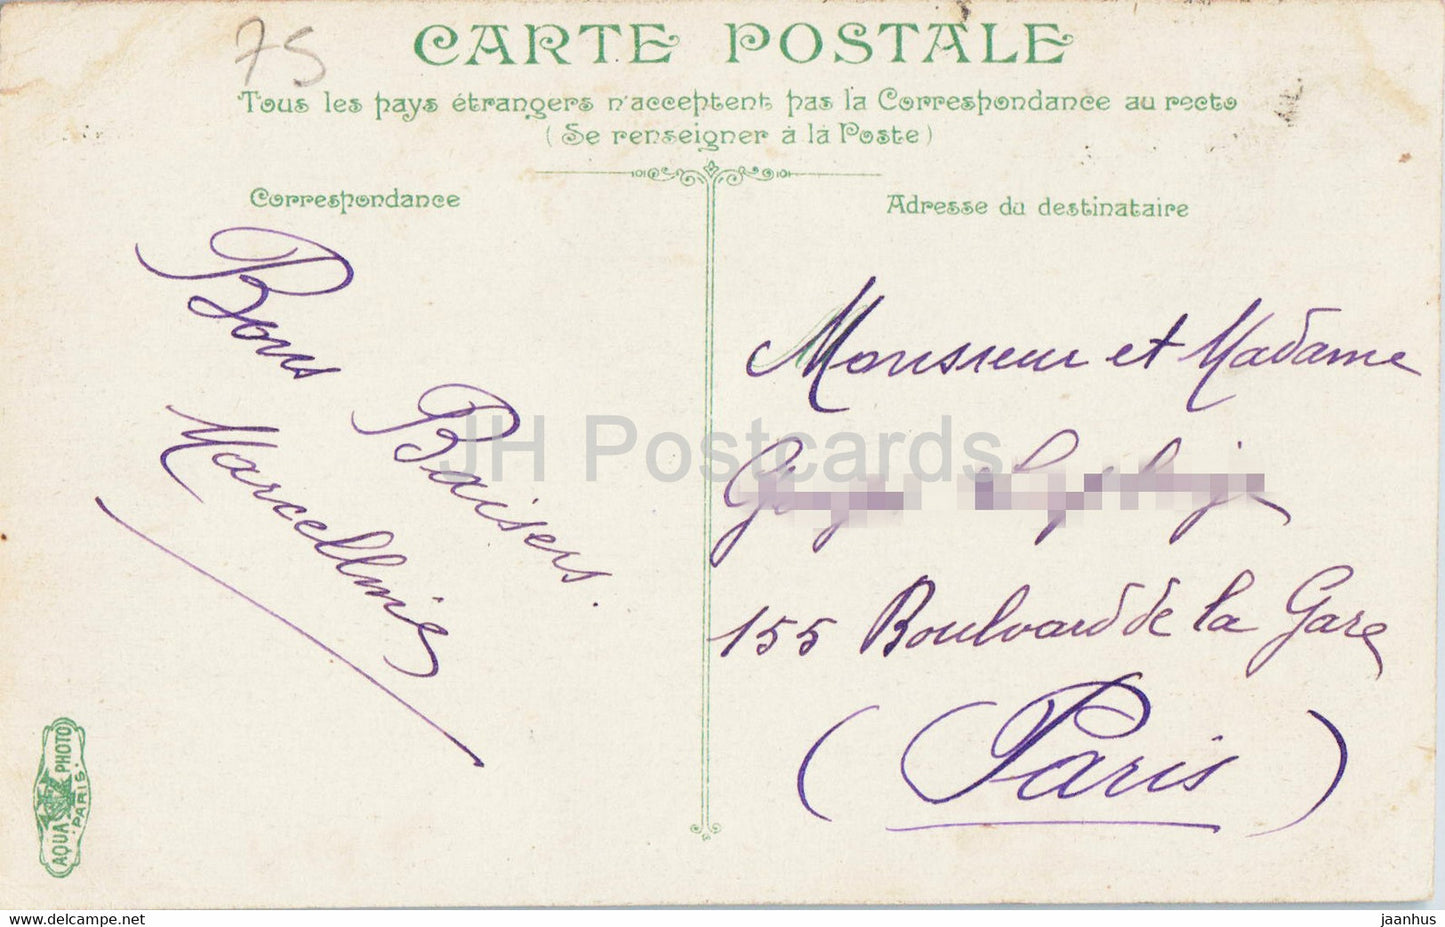 Jardins des Versailles - Les Cent Marches - 2389 - old postcard - 1910 - France - used